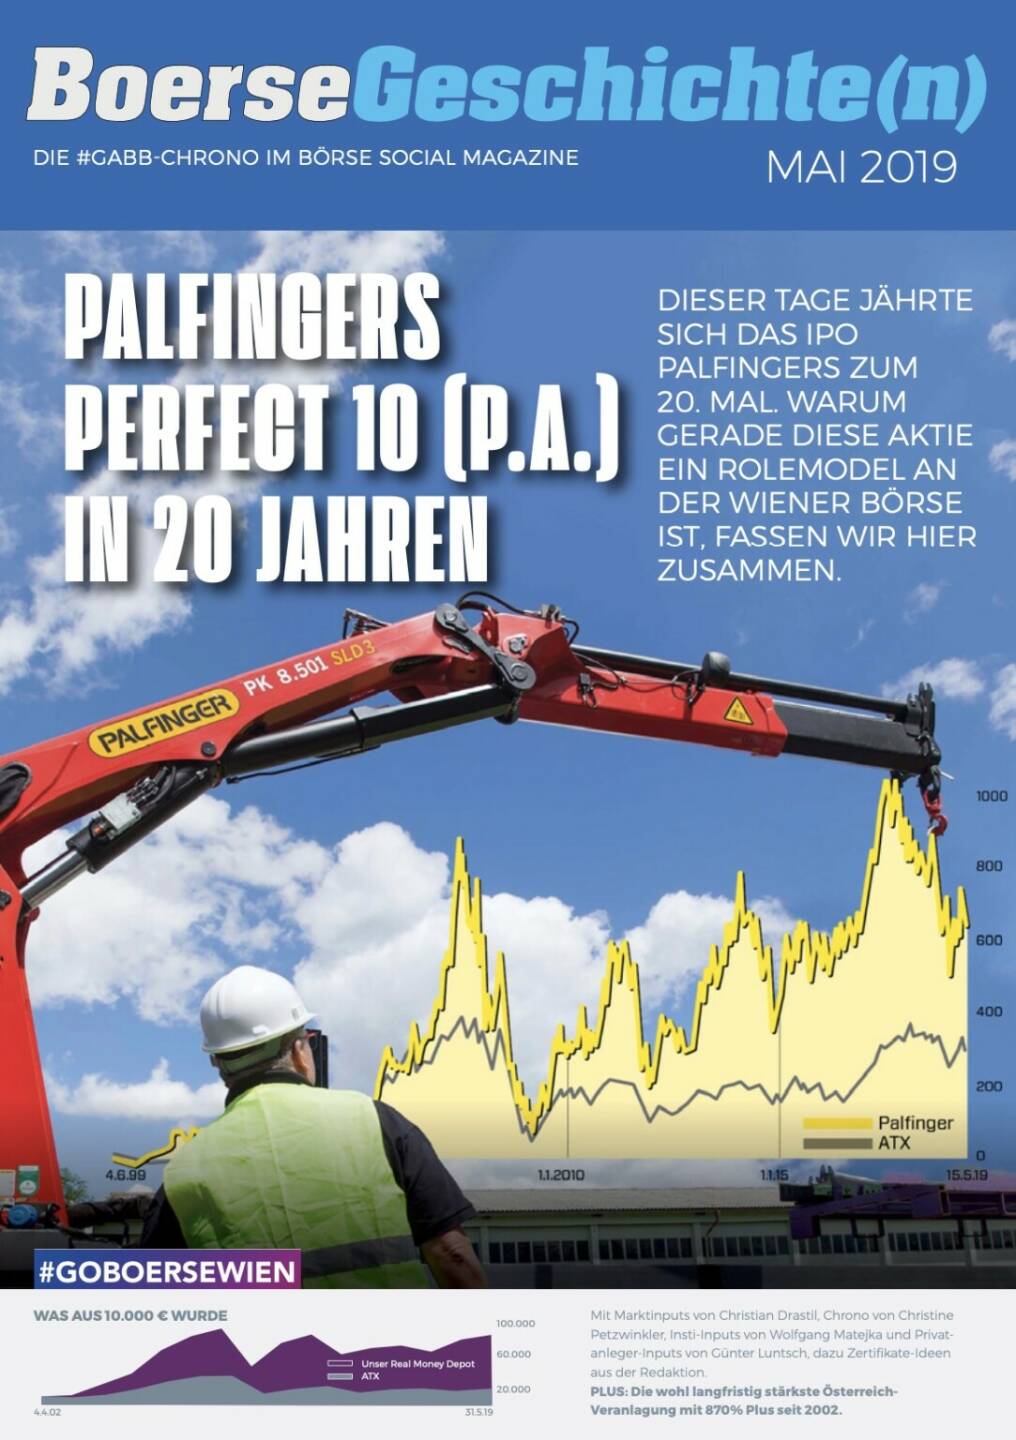 Börsegeschichte(n) Mai 2019 - Palfingers perfect 10 (p.a.) in 20 Jahren